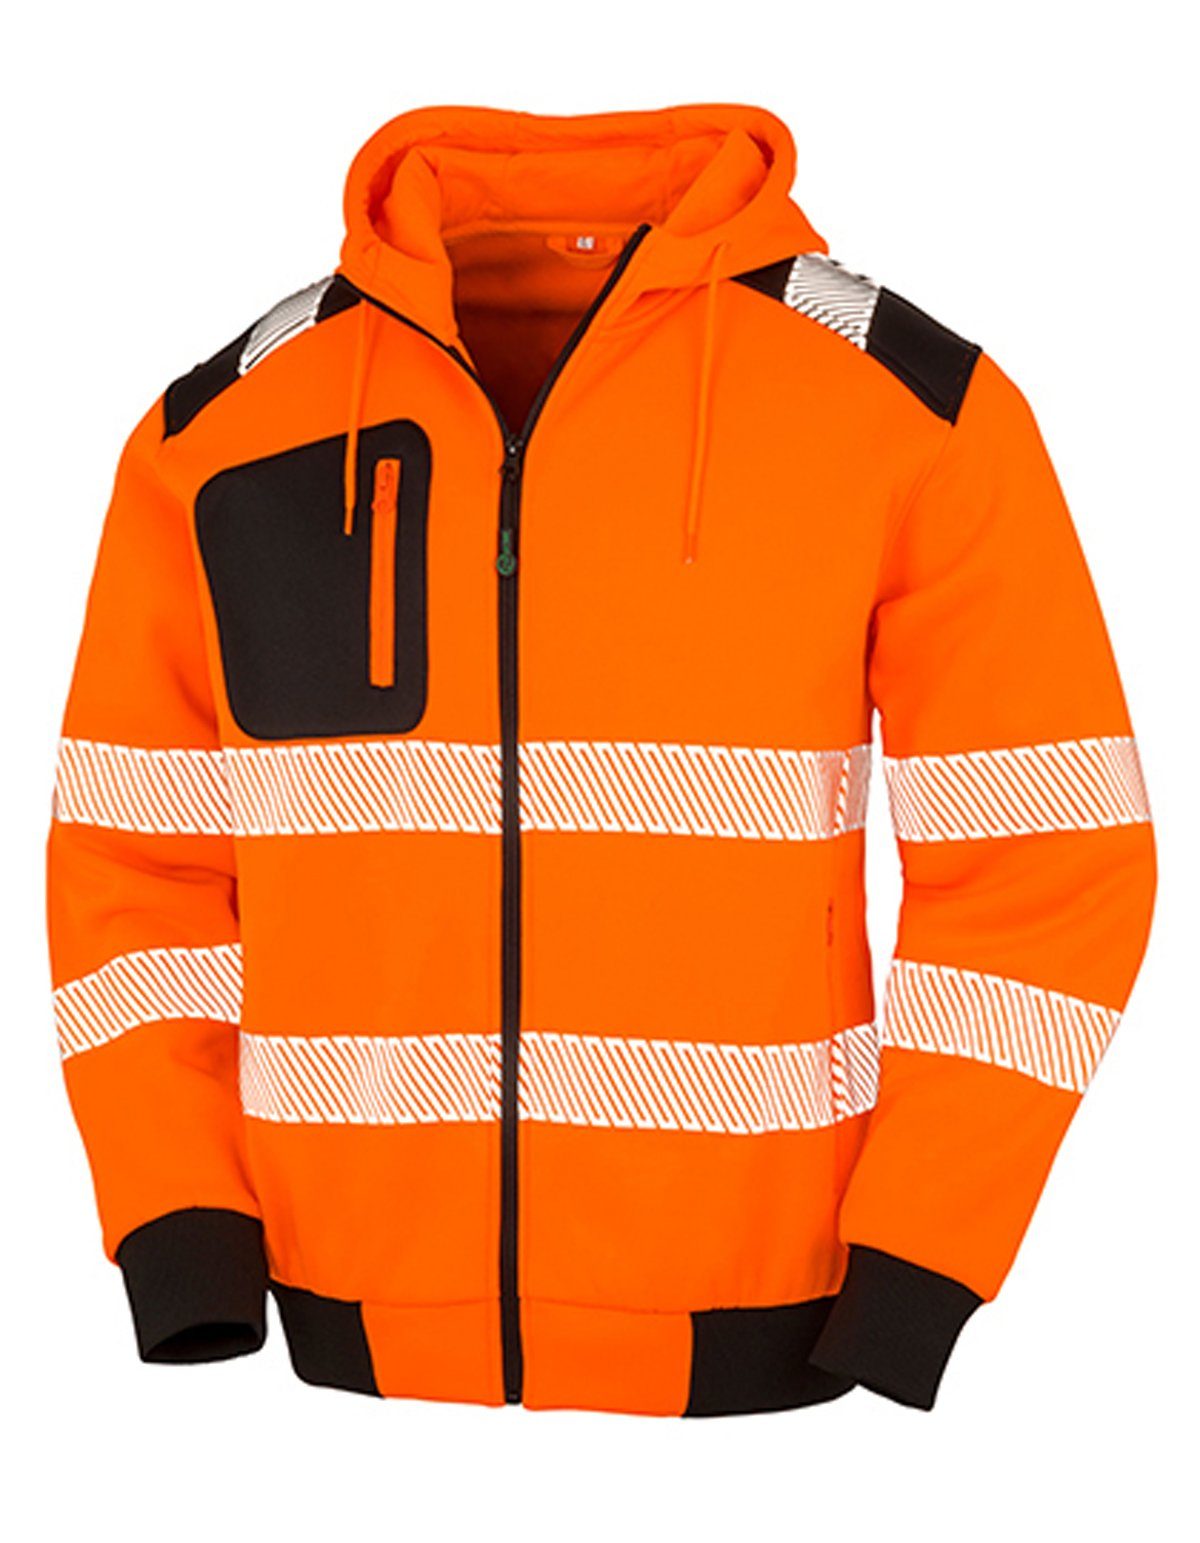 Result Arbeitsjacke Sicherheitsjacke Safety Jacke aus recyceltem Polyester atmungsaktiv RT503 Fluorescent Orange-Black